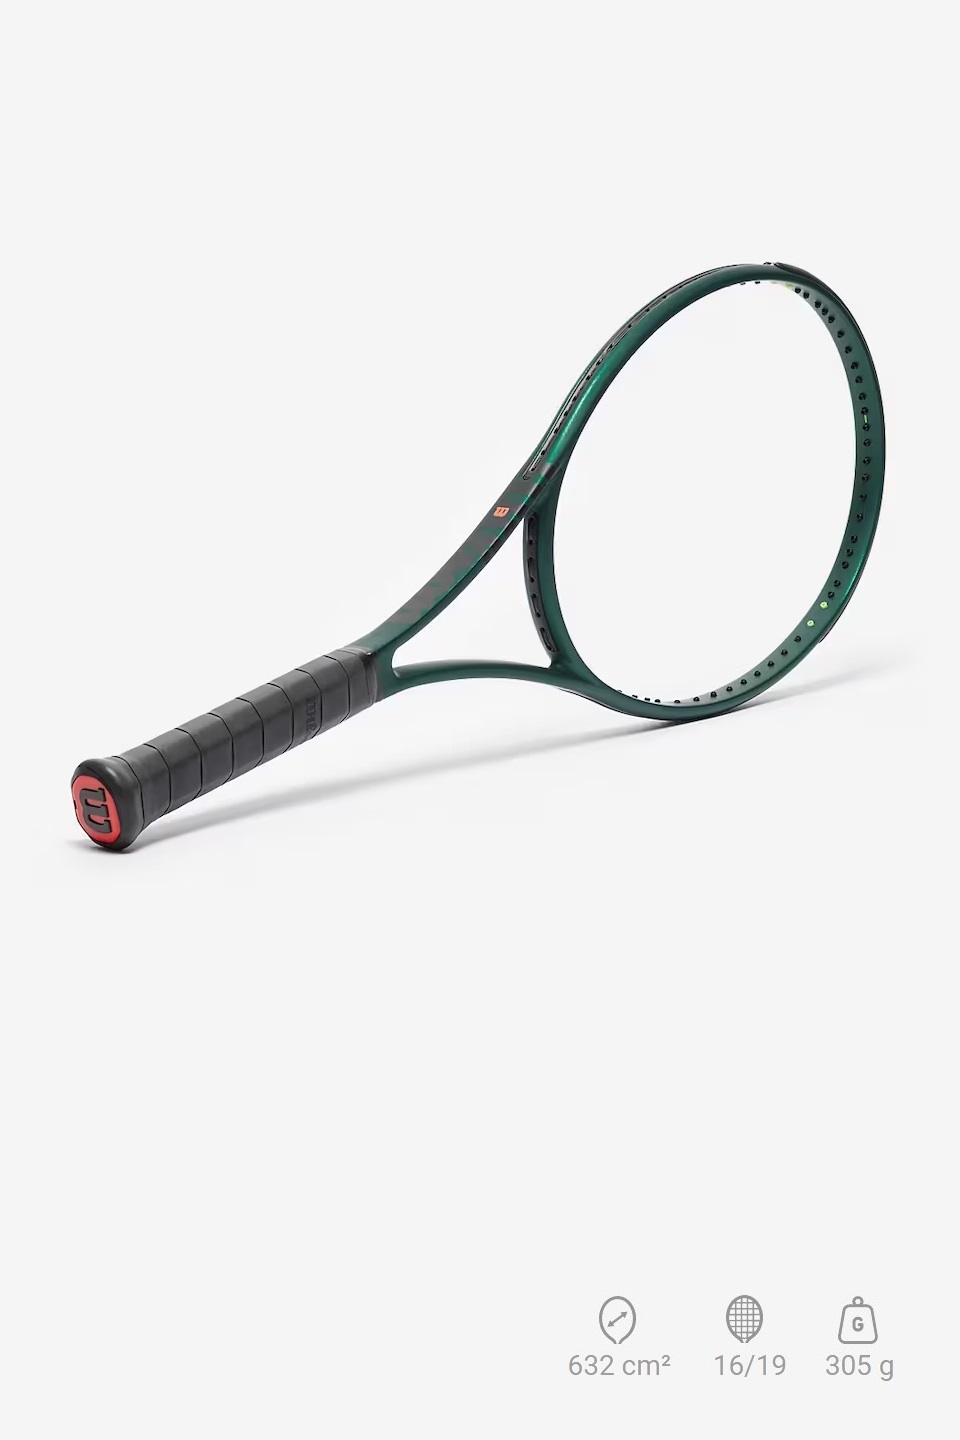 Wilson Blade 98 (16x19) v9 Tenis Raketi